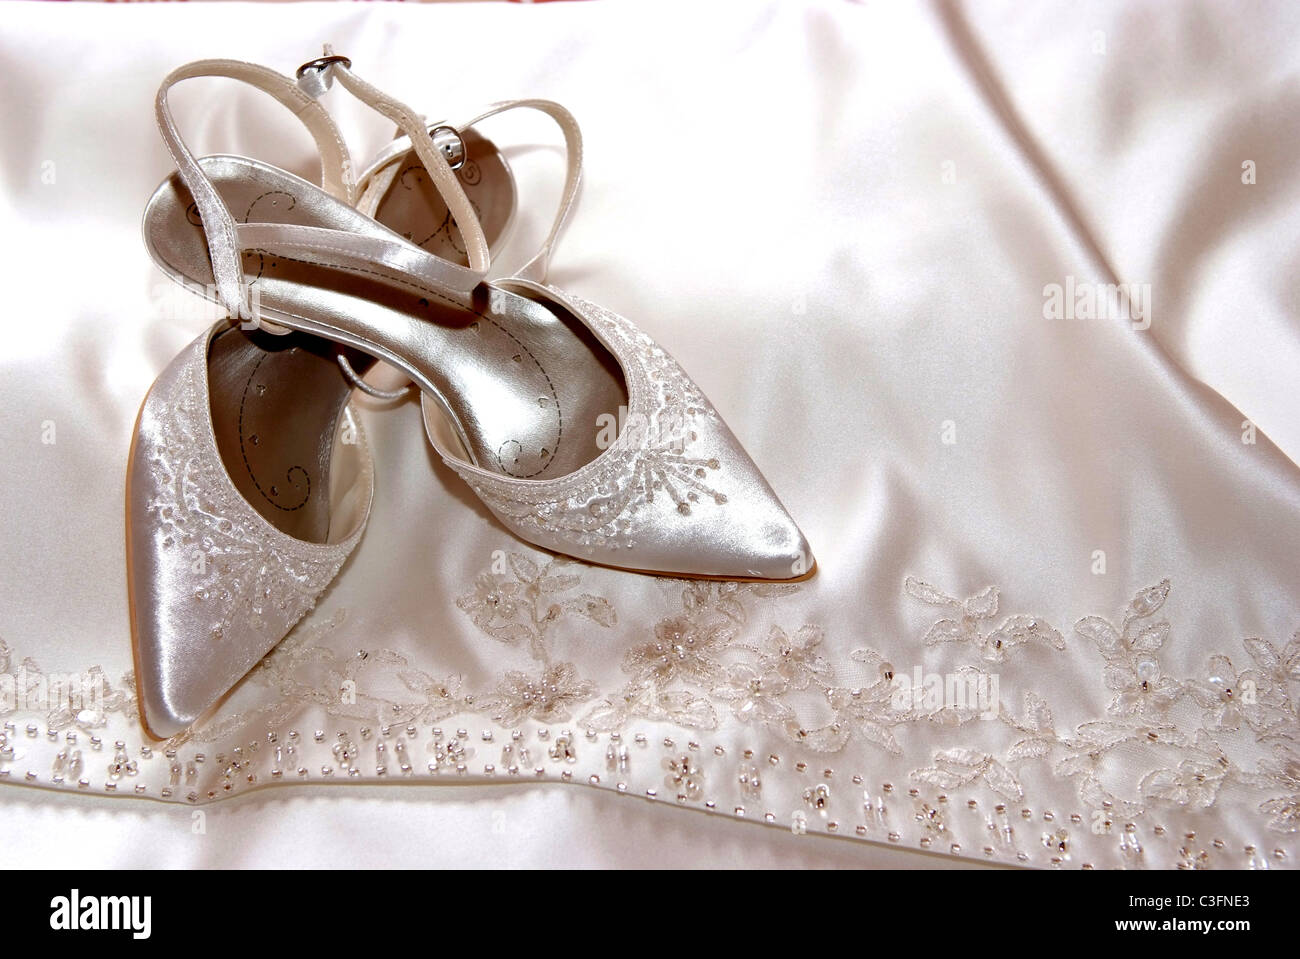 wedding shoes on wedding dress Stock Photo - Alamy